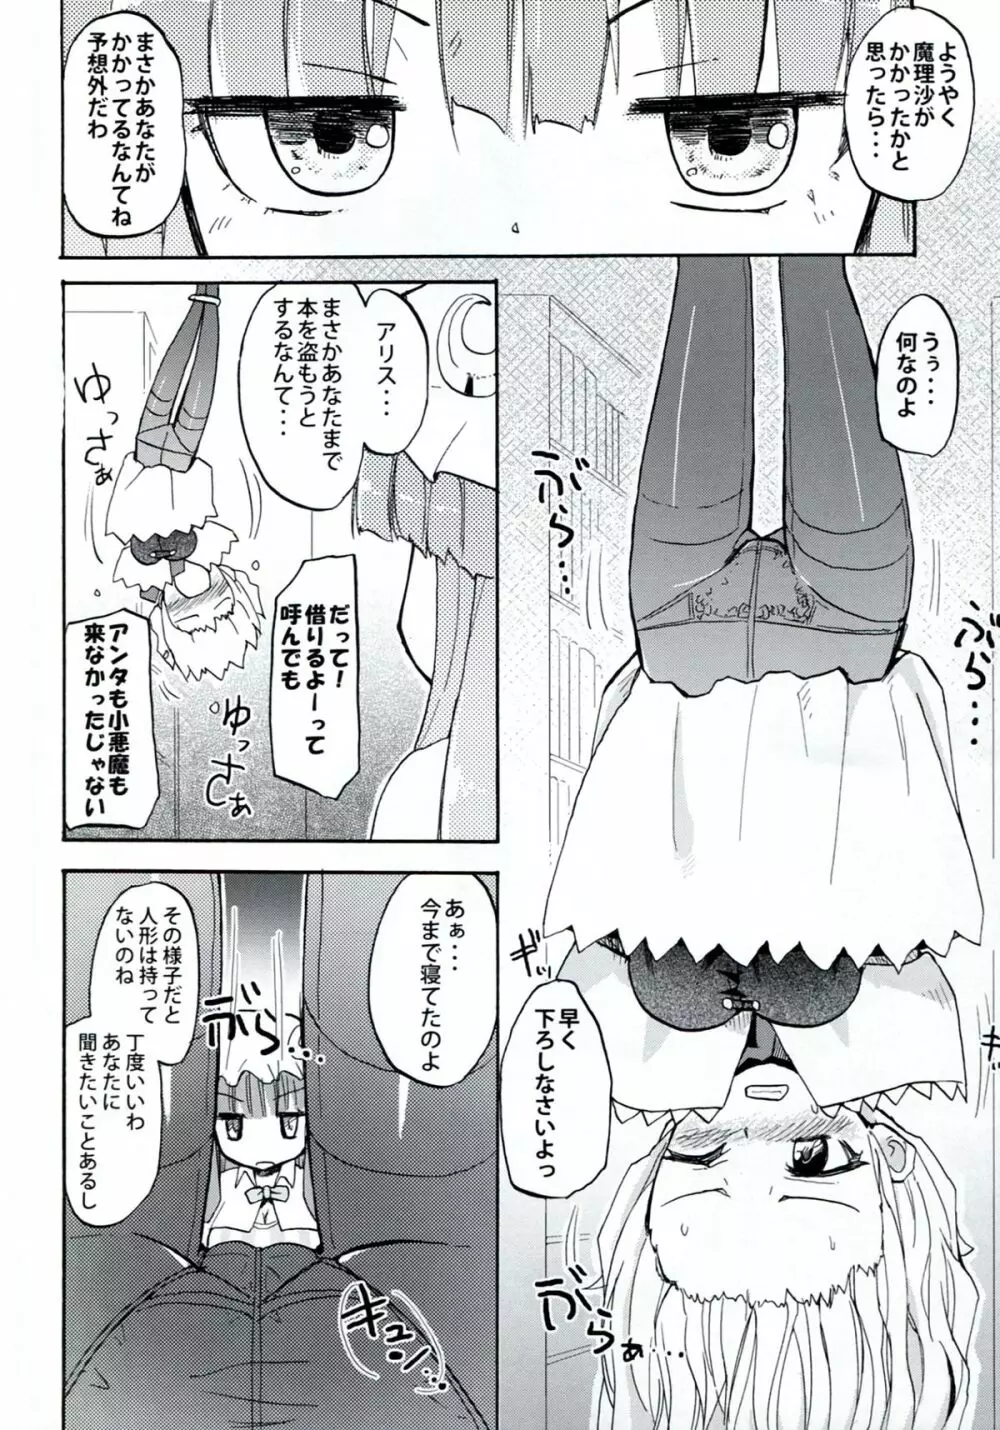 Homuraya Milk ★ Collection 2 - page12